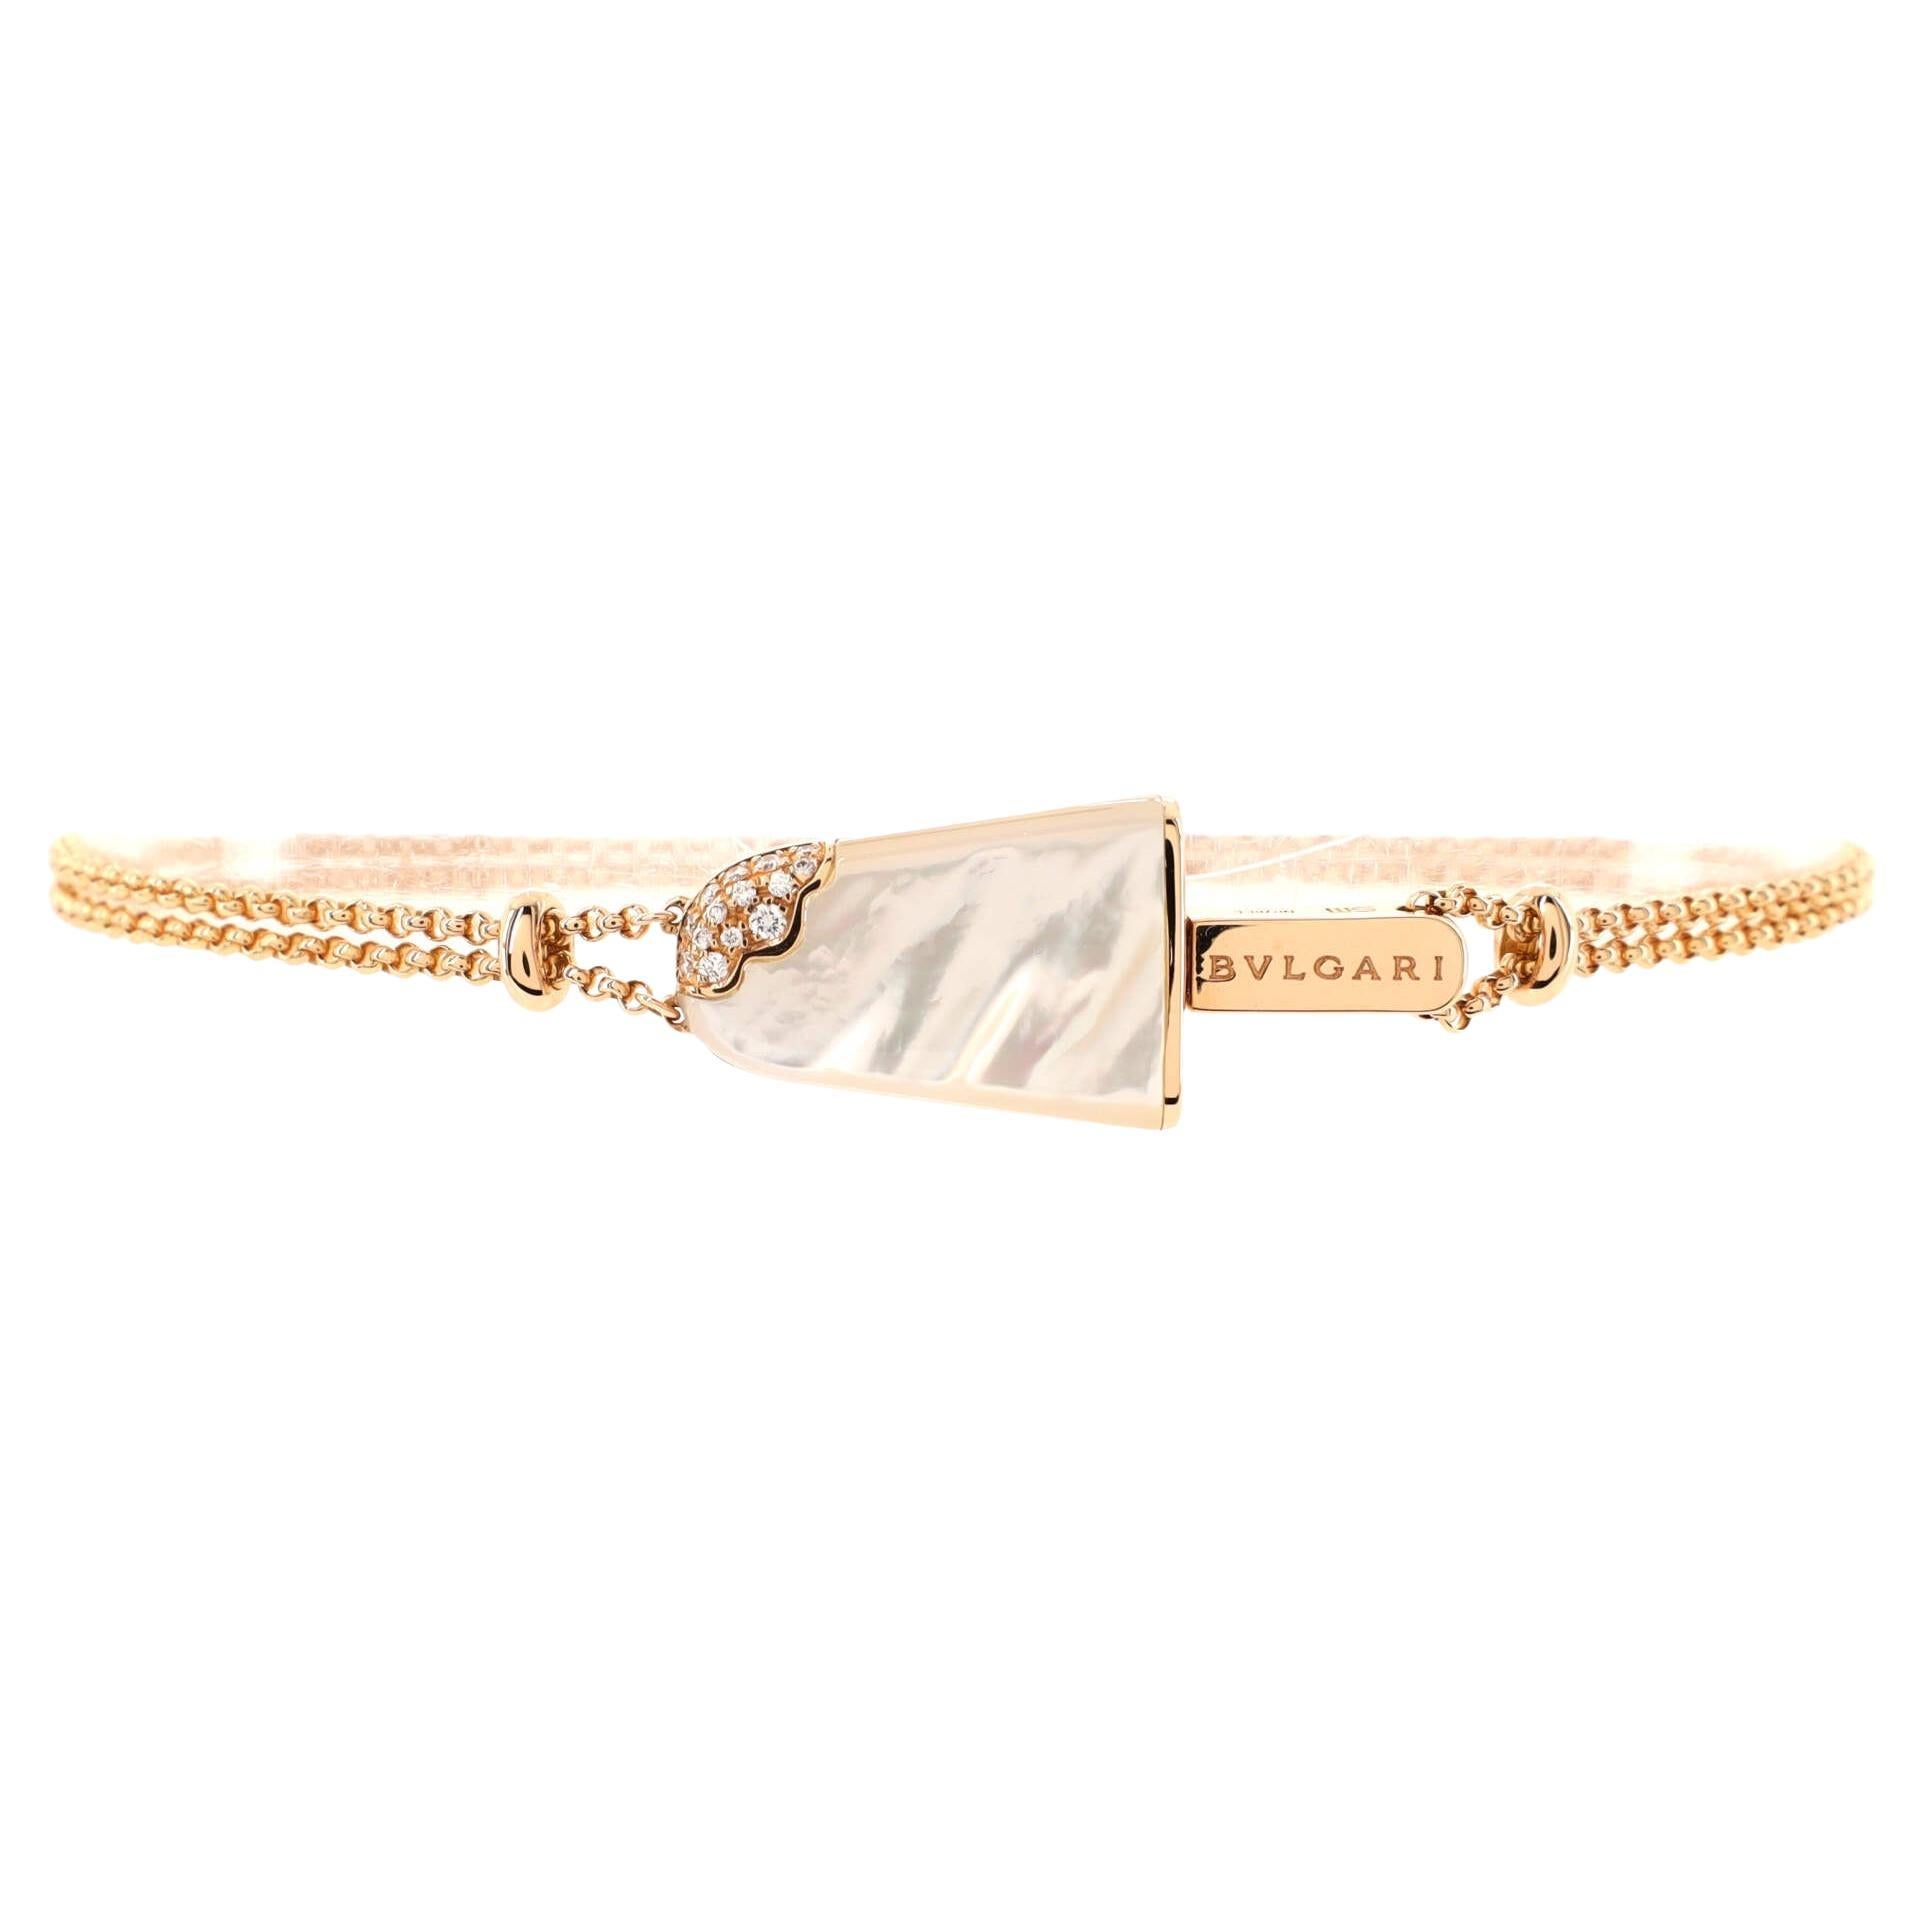 Bvlgari Gelati Bracelet 18k Rose Gold with Mother of Pearl and Diamonds